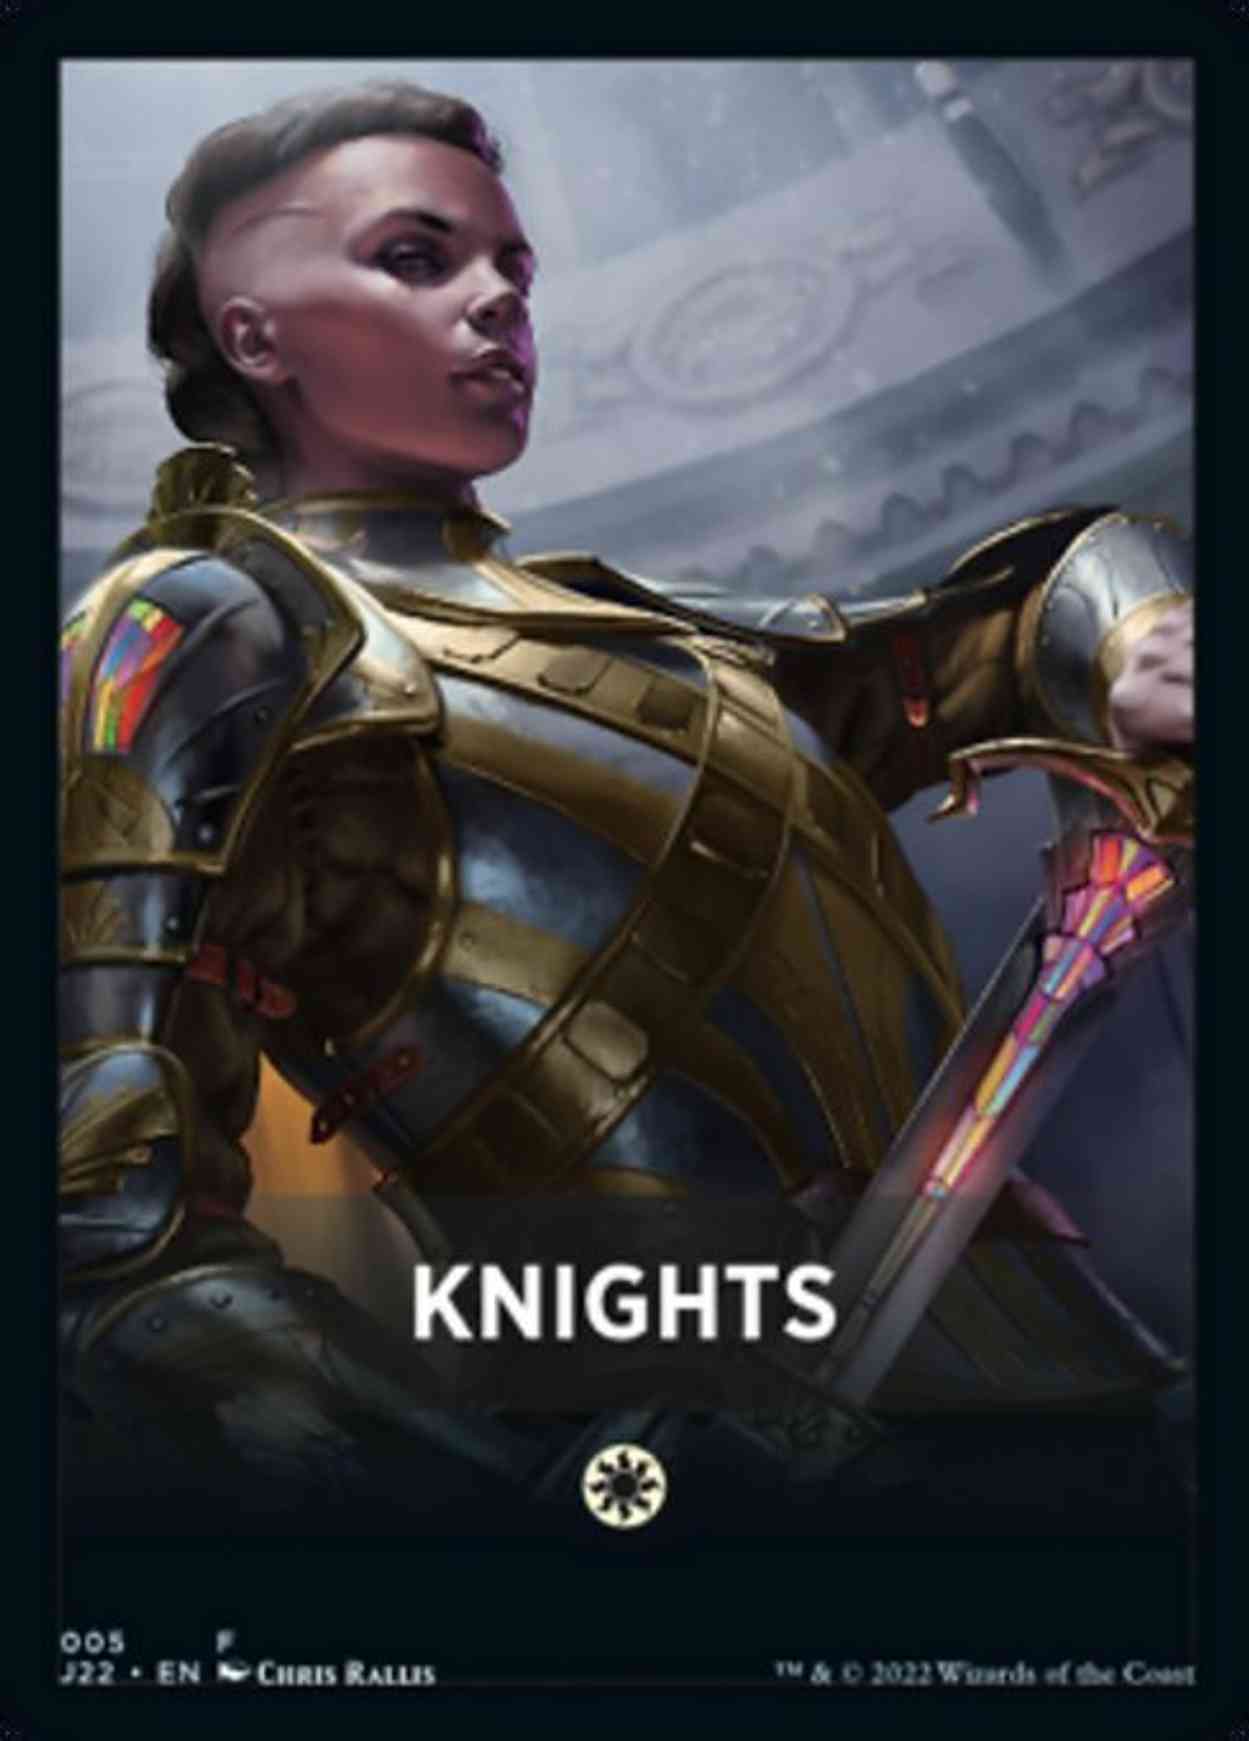 Knights Theme Card magic card front